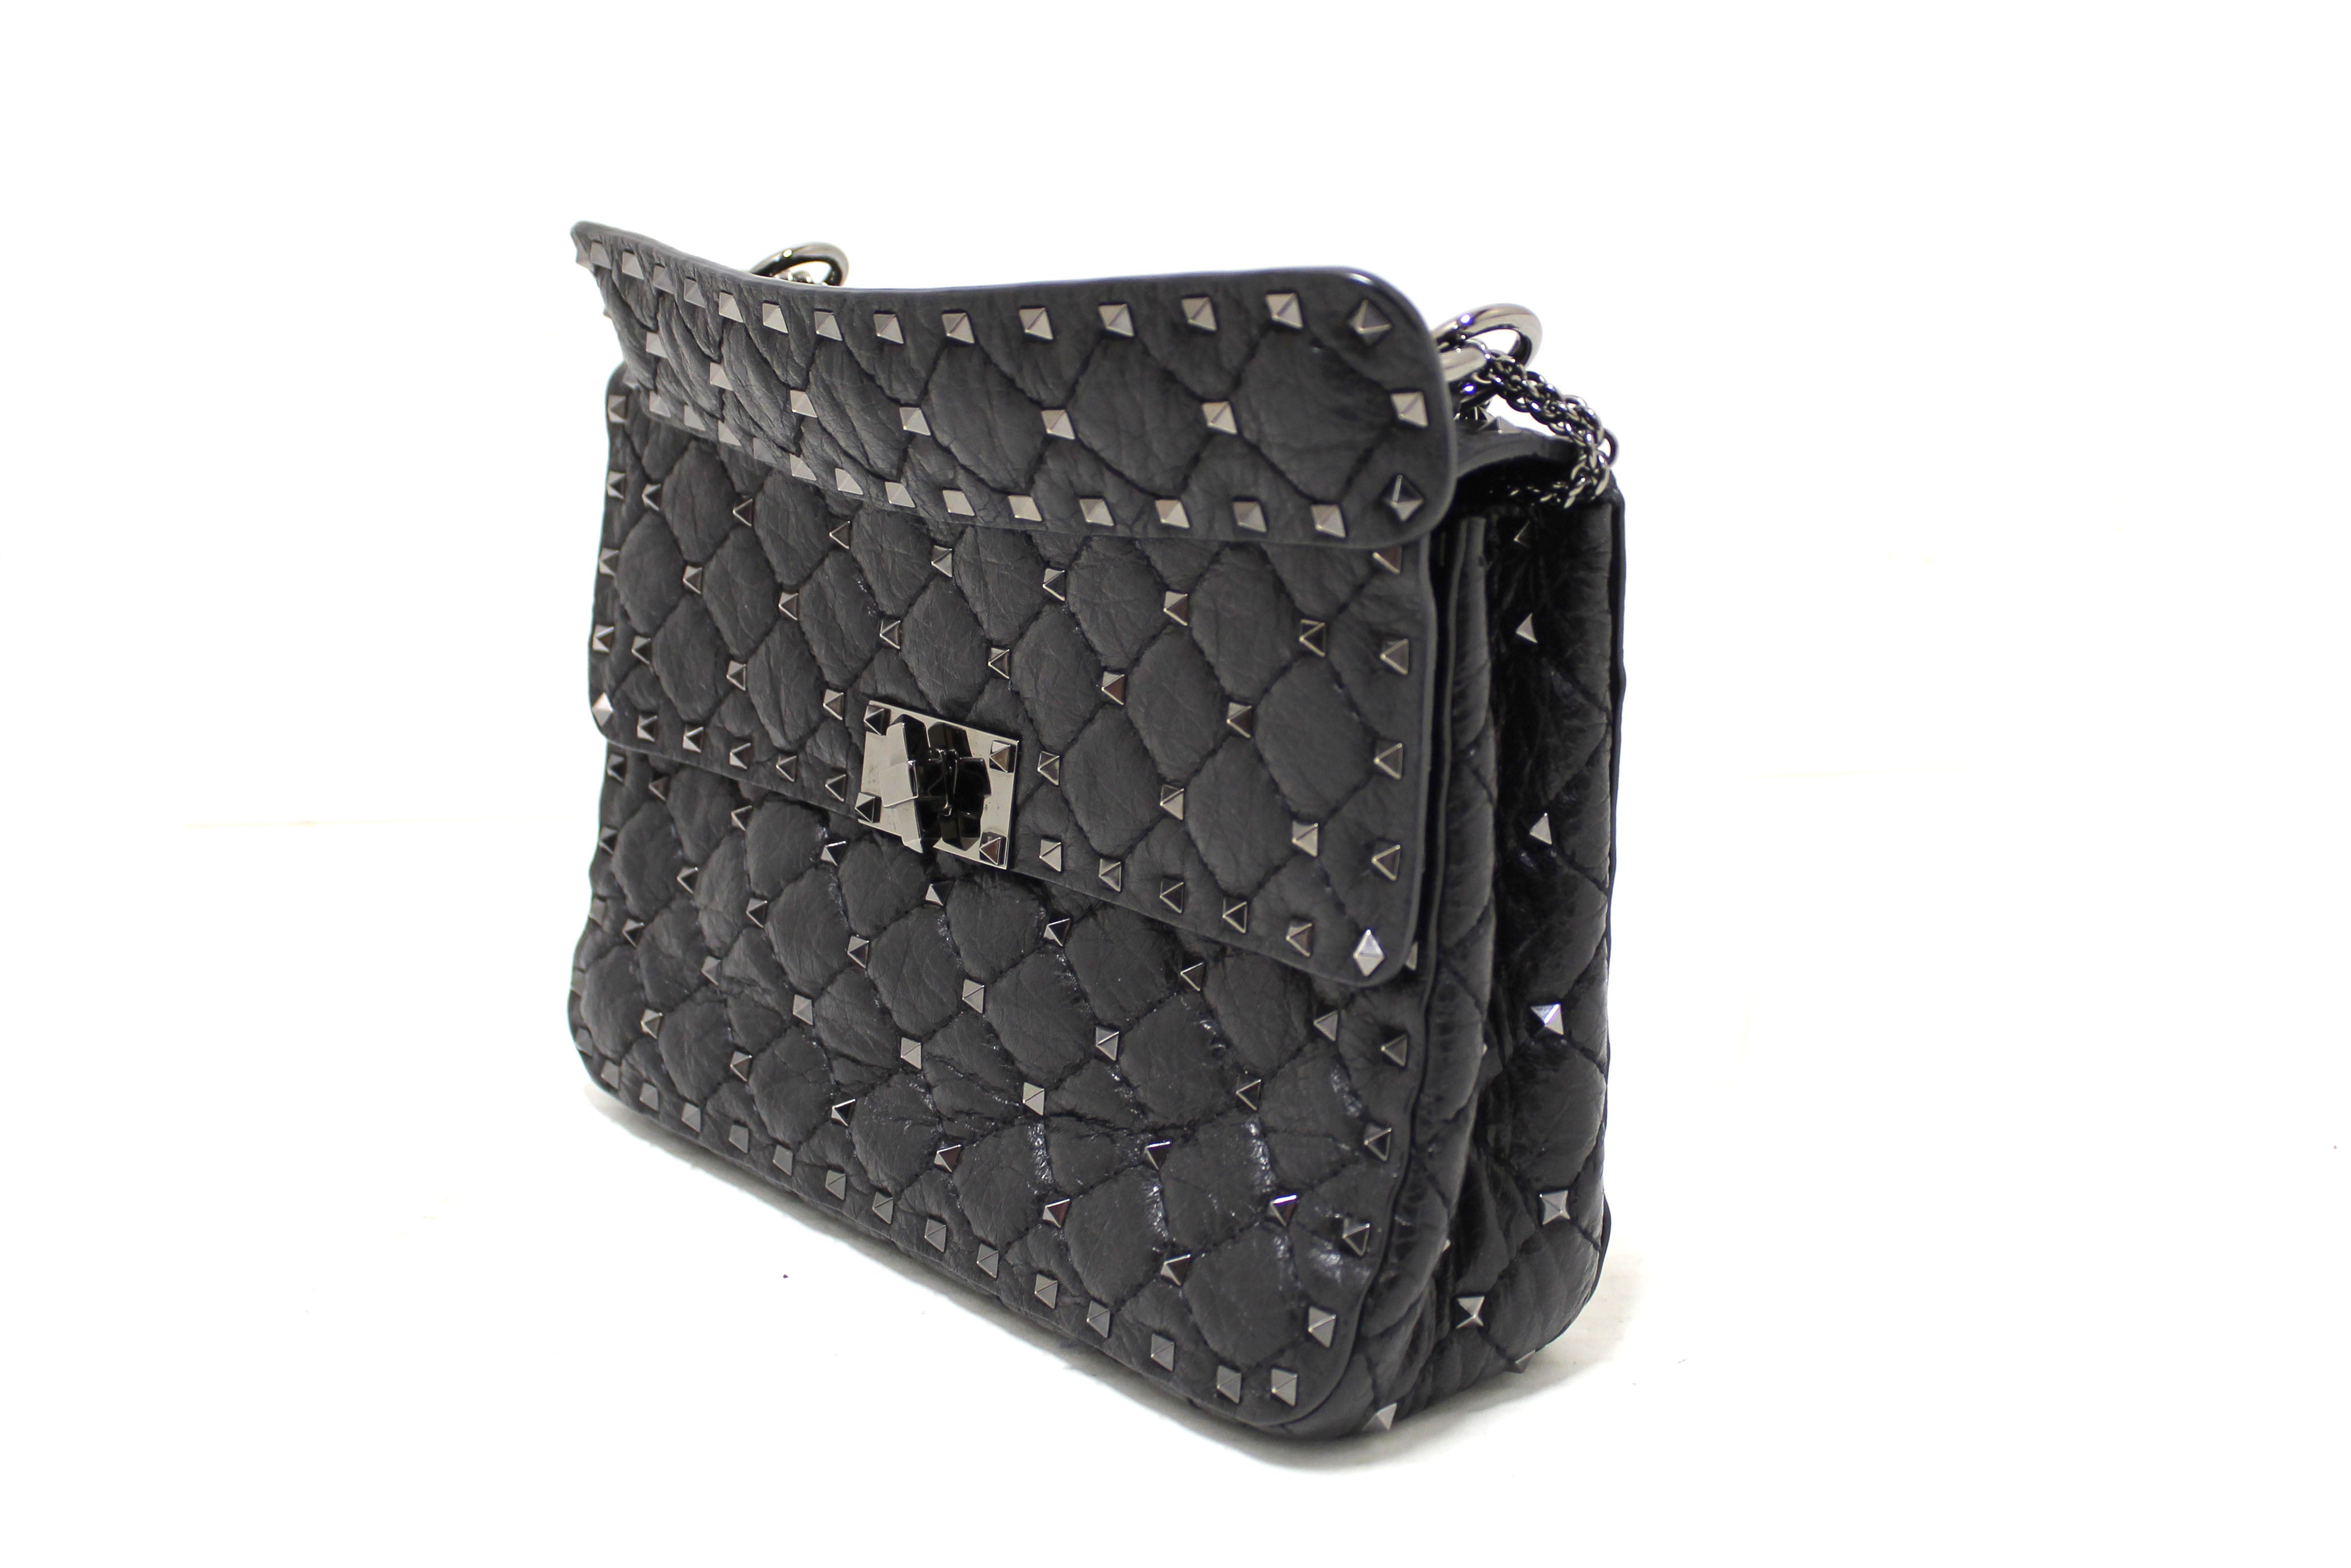 Authentic Valentino Garavani Black Quilted Nappa Leather Rockstud Spike Medium Shoulder Bag